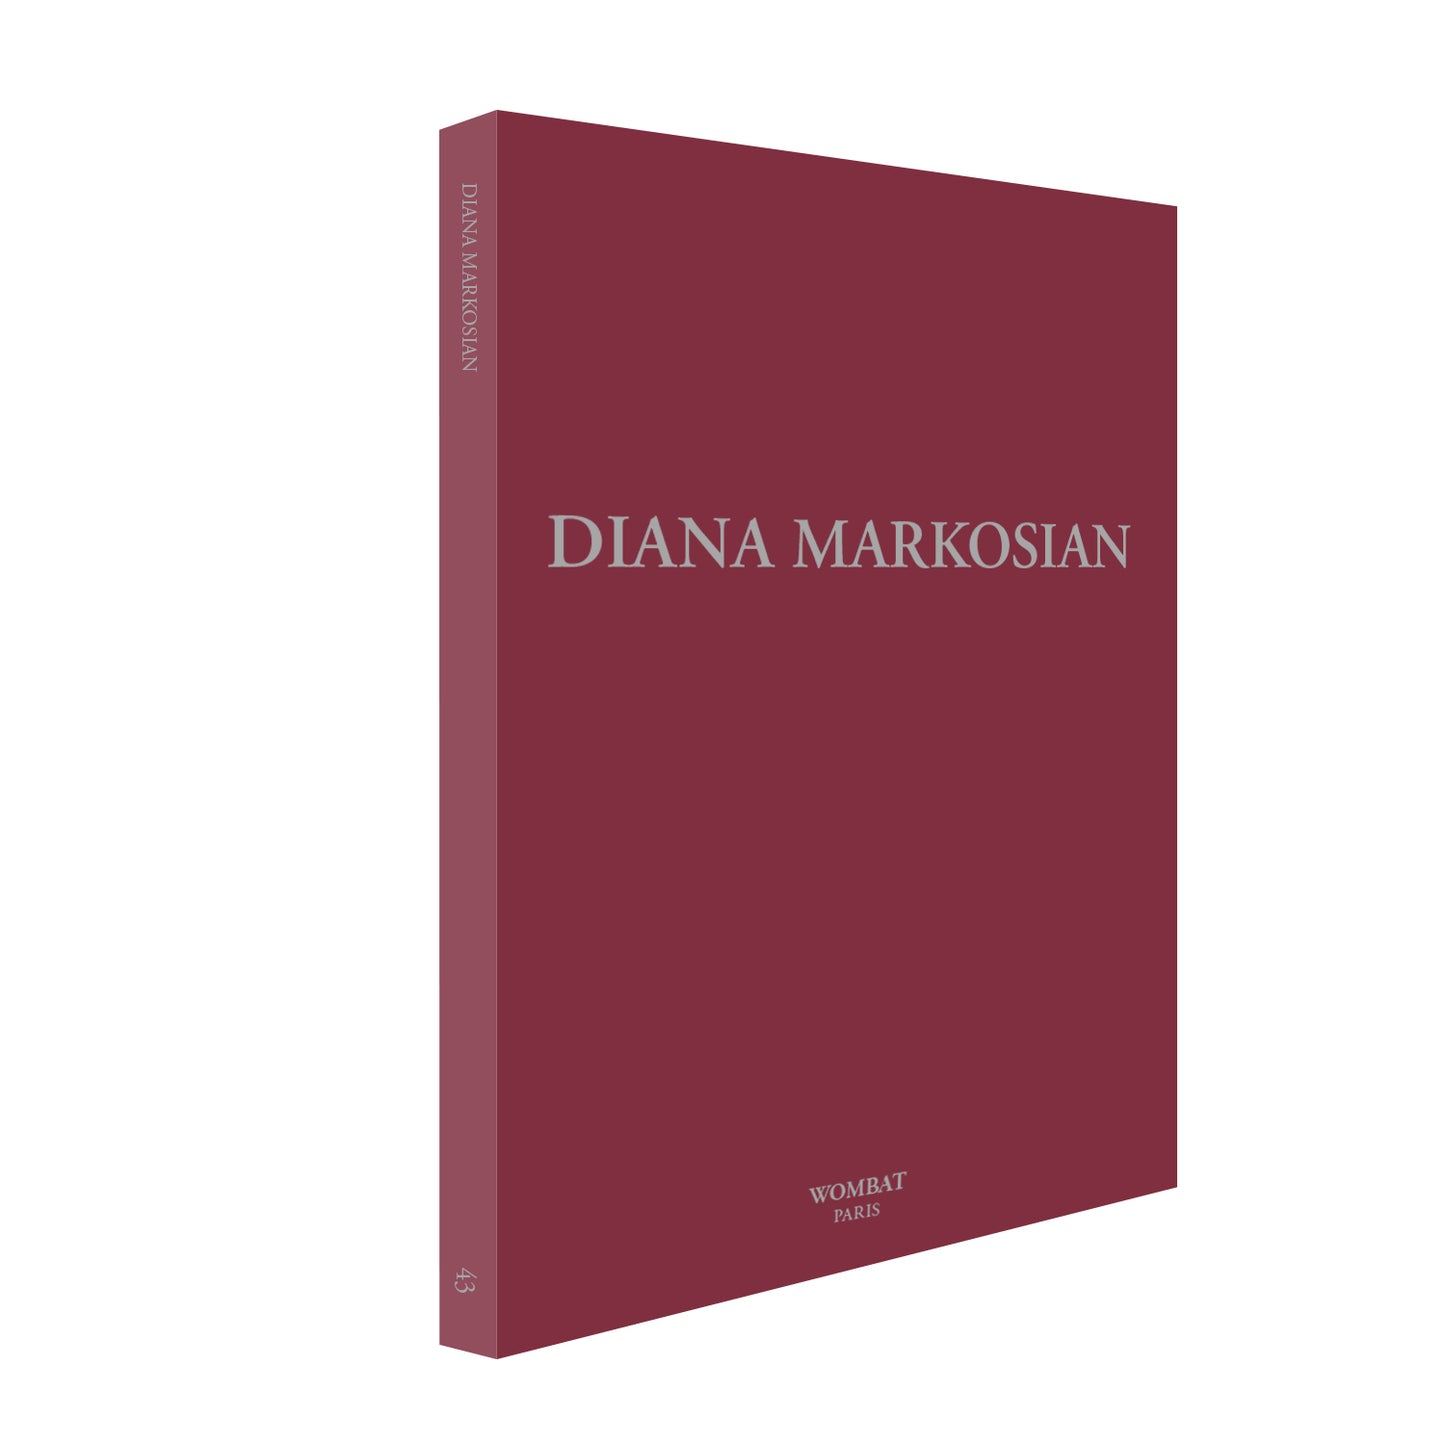 Artist Box 43 - Diana Markosian